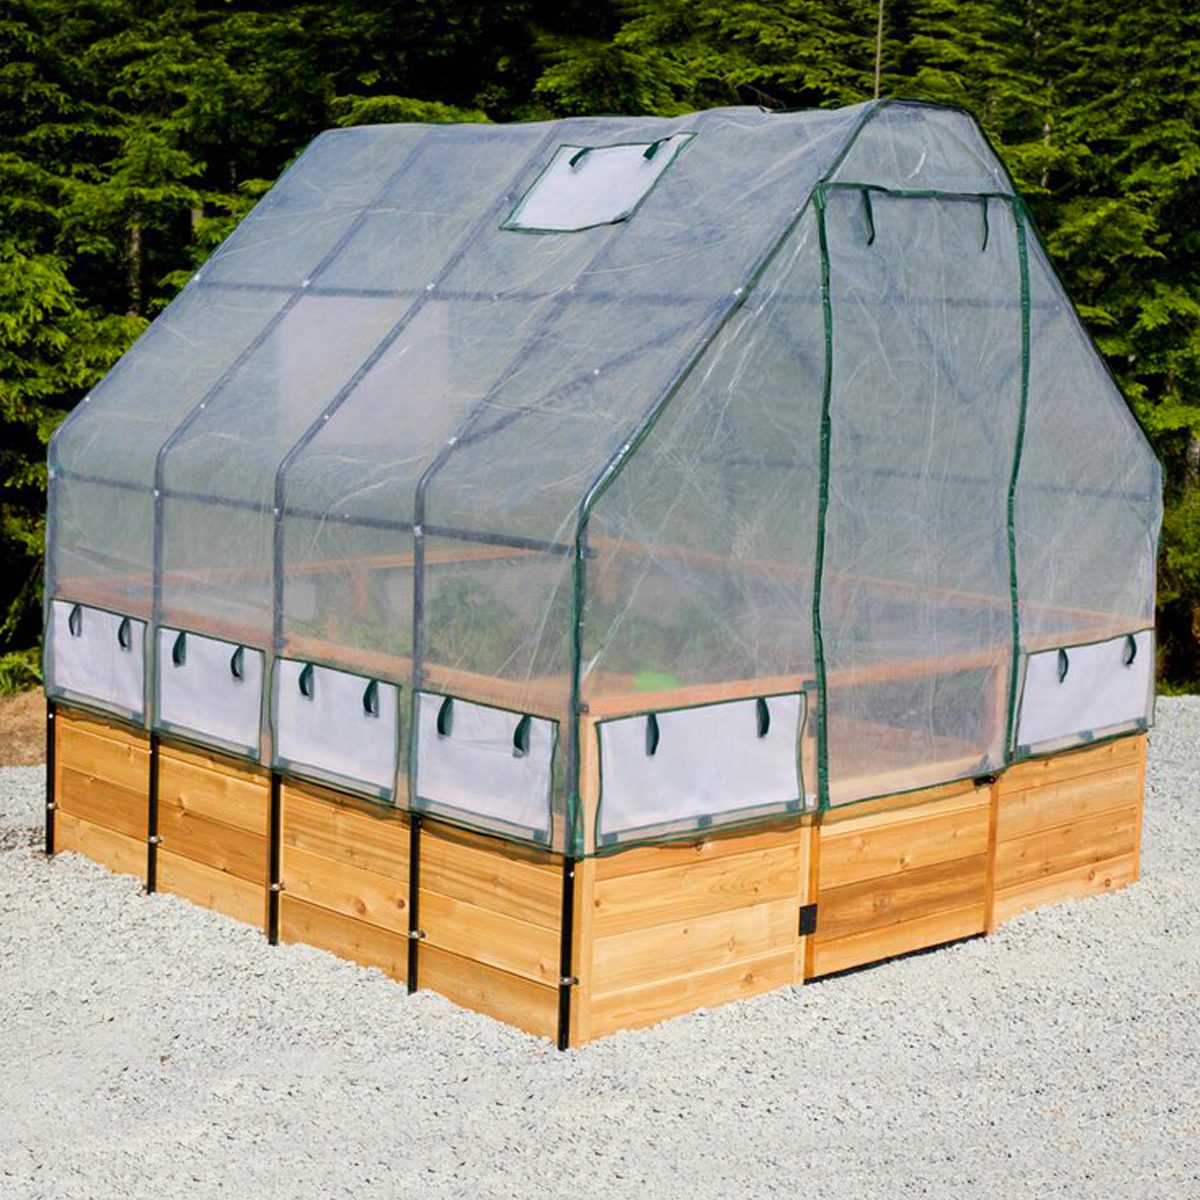 Cedar Garden In A Box With Greenhouse Covering Ecomm Wayfair.com